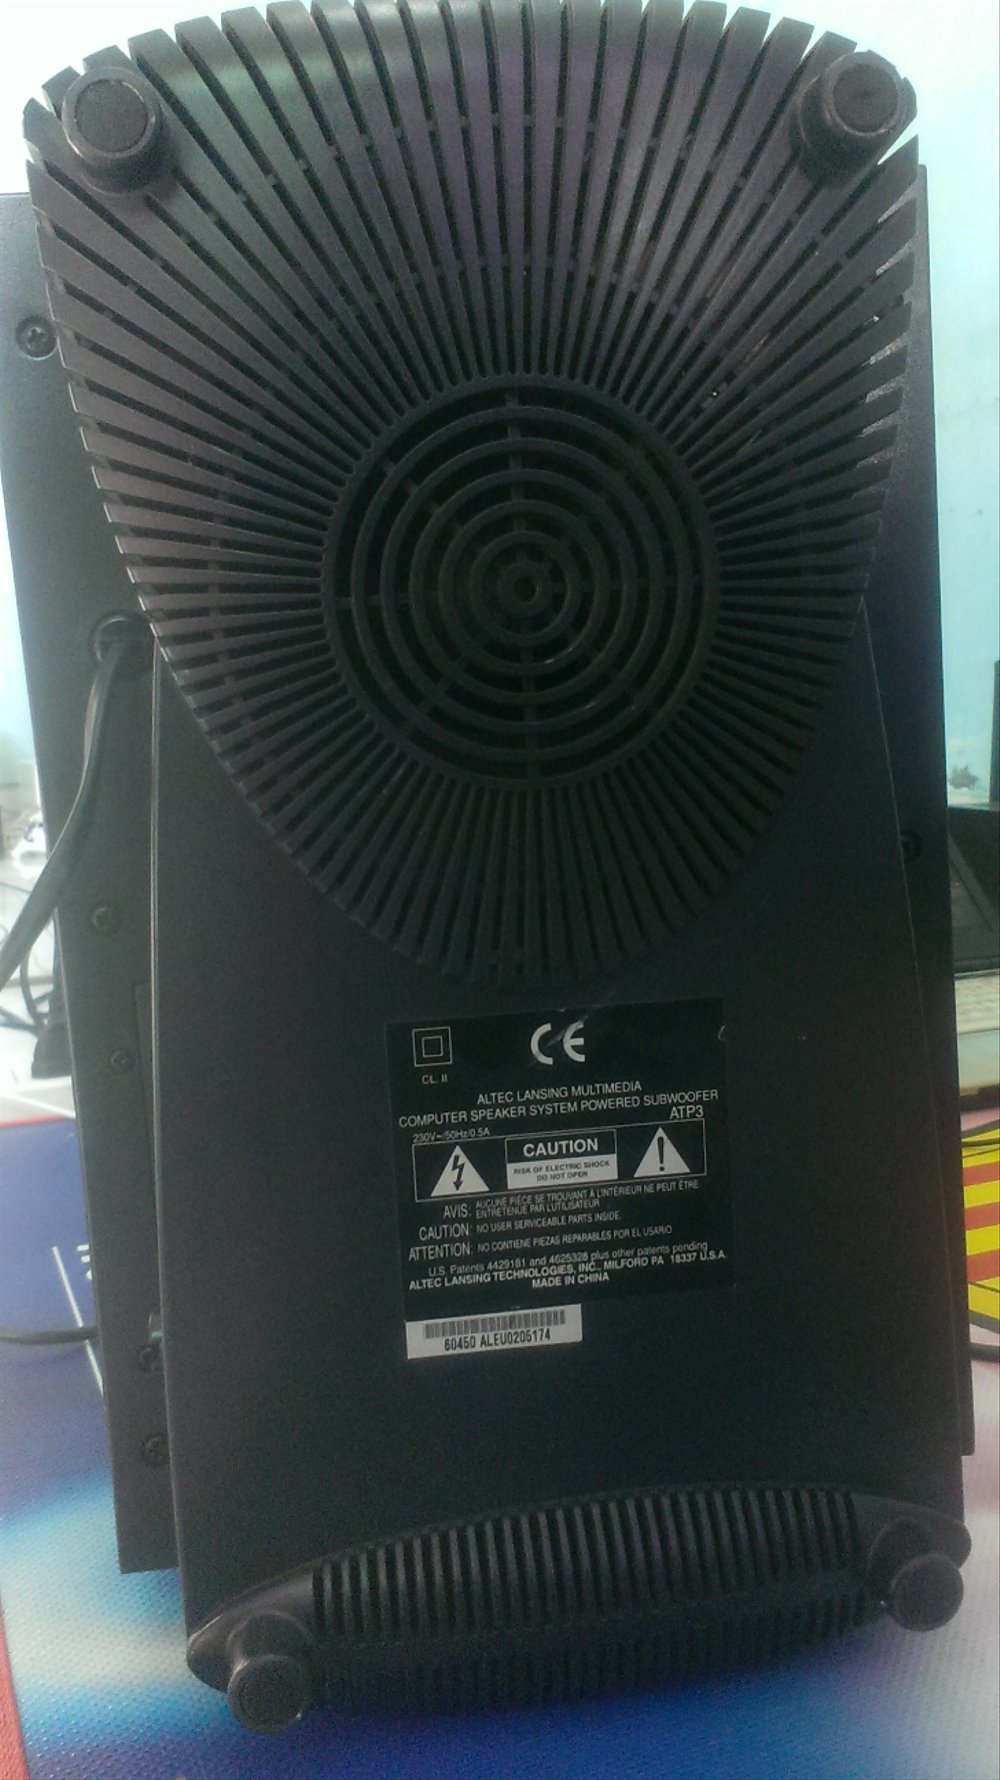 altec lansing speakers atp3